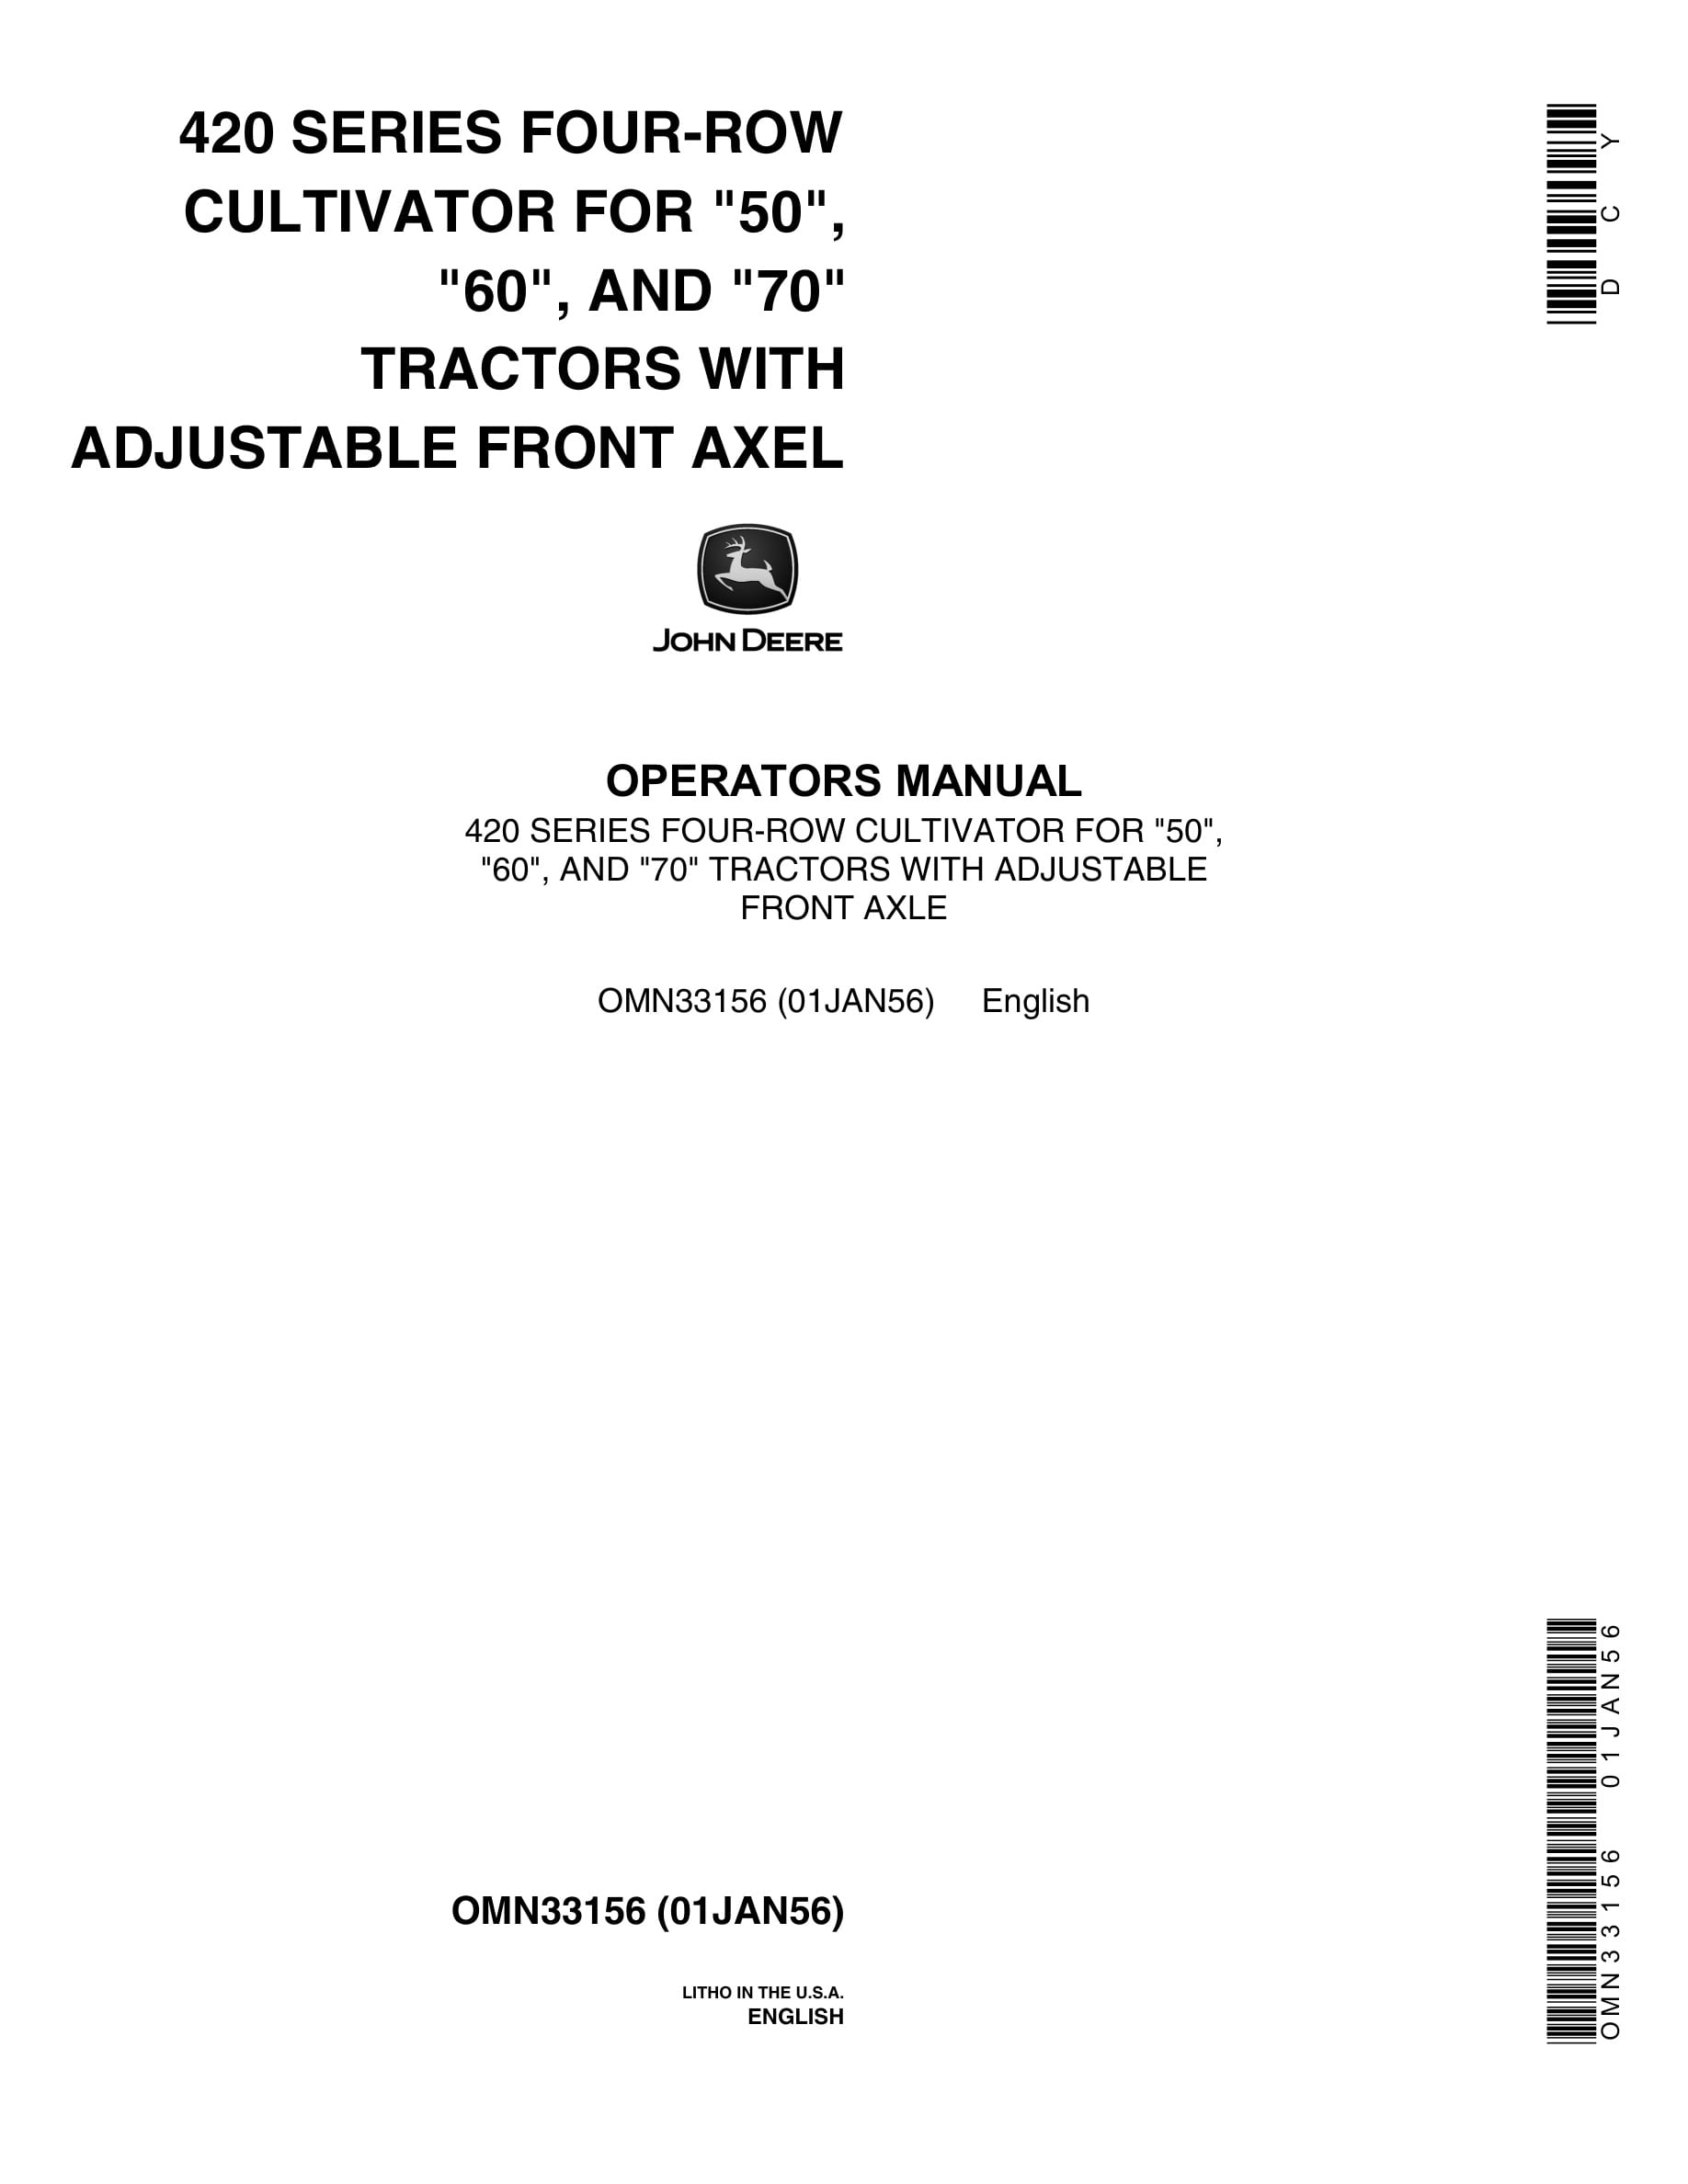 John Deere 420 SERIES FOUR-ROW CULTIVATOR Operator Manual OMN33156-1